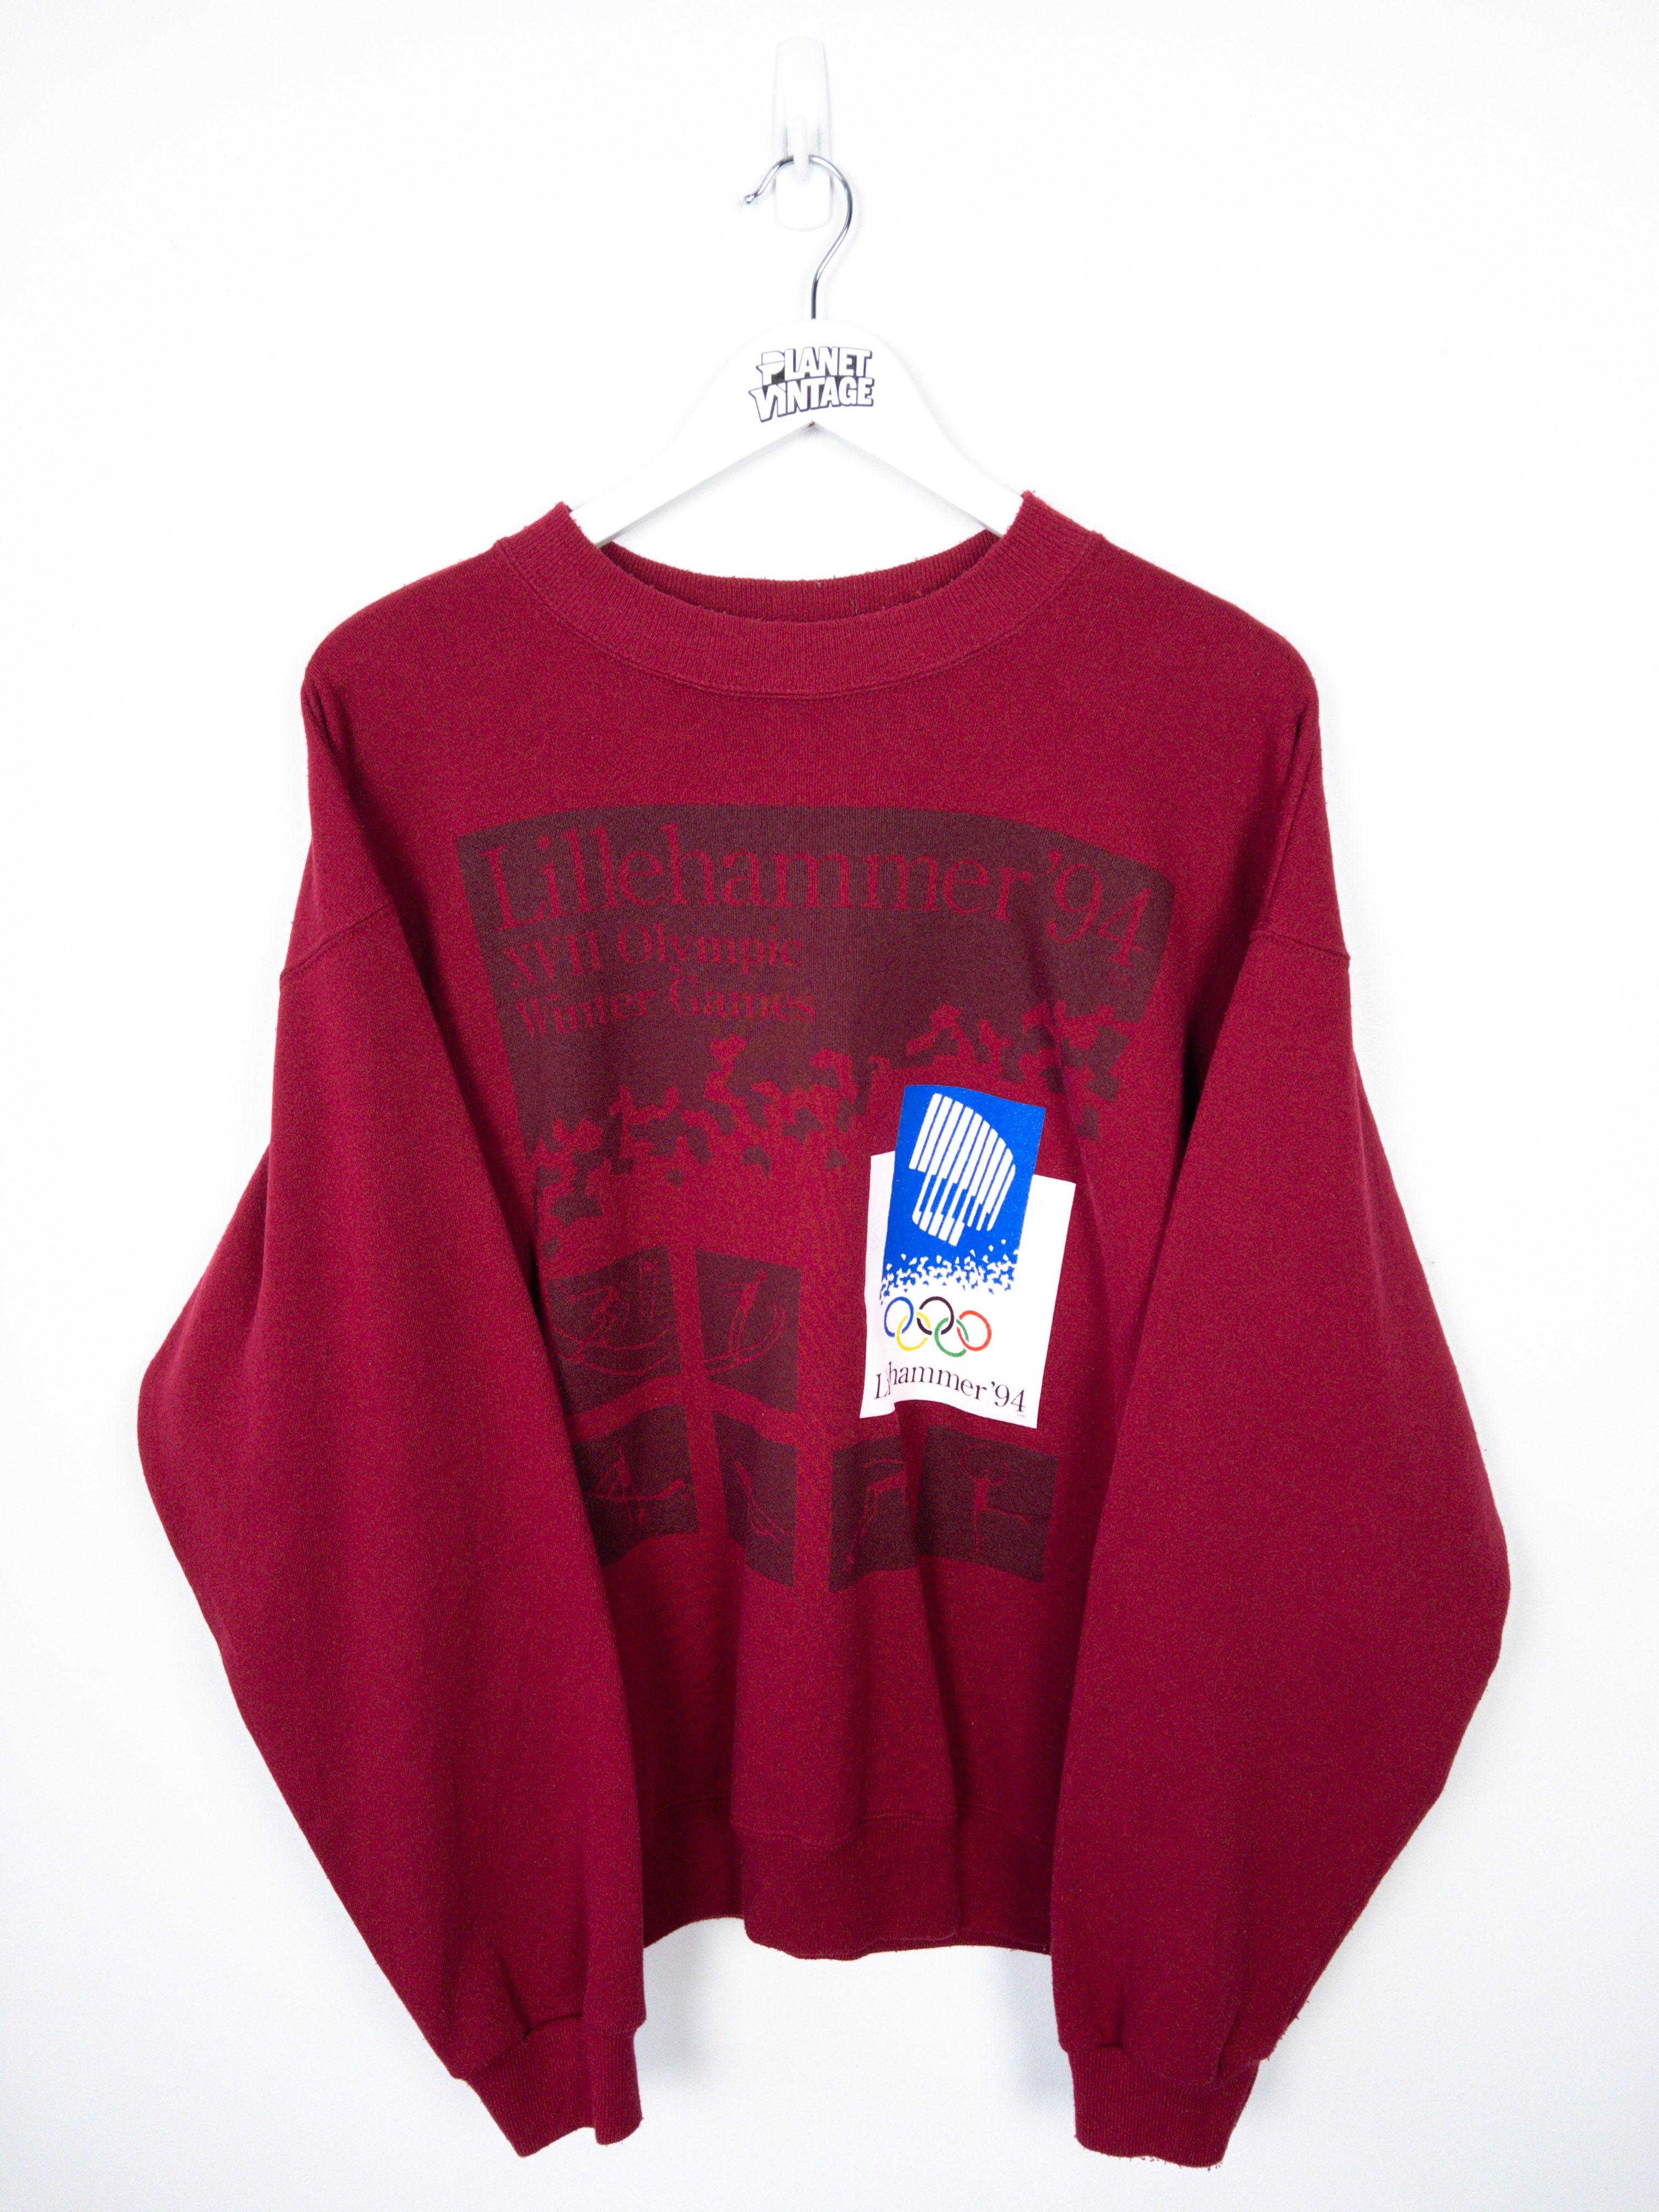 Vintage Winter Olympics 1994 Sweatshirt (L)